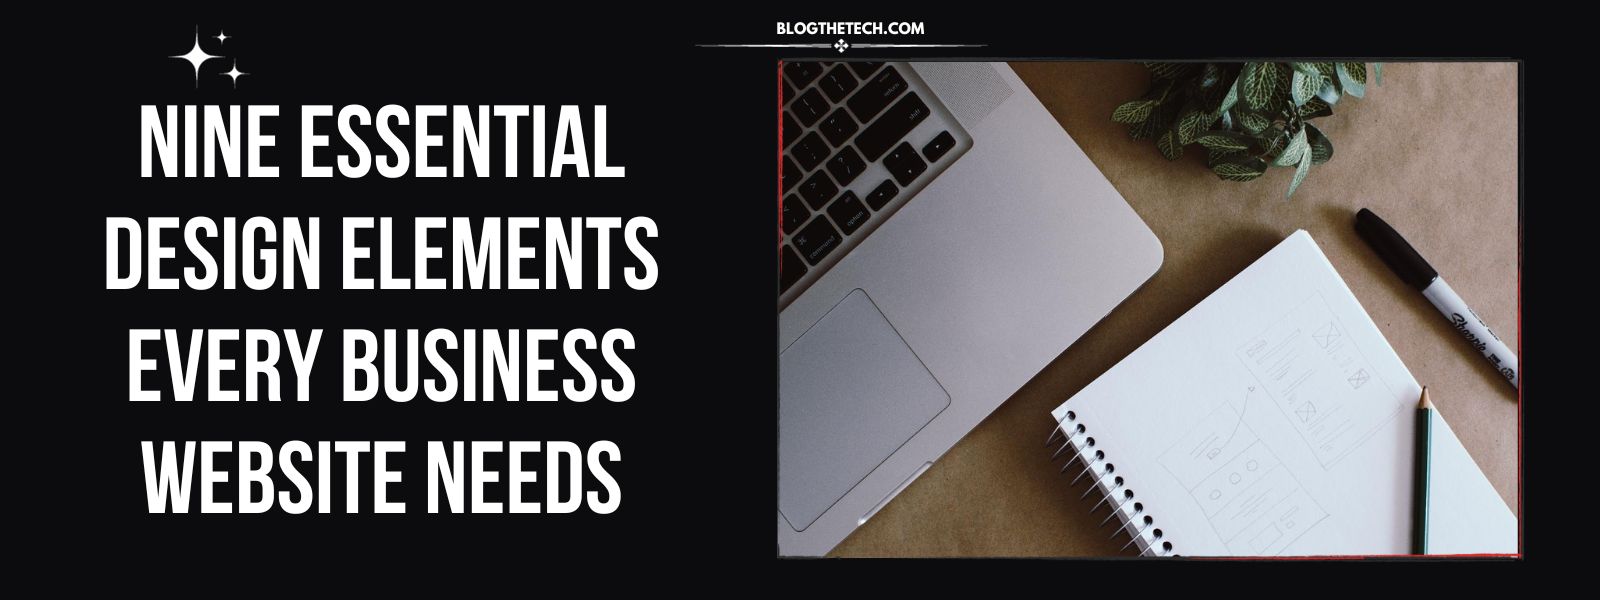 Design Elements Every Business Website Needs